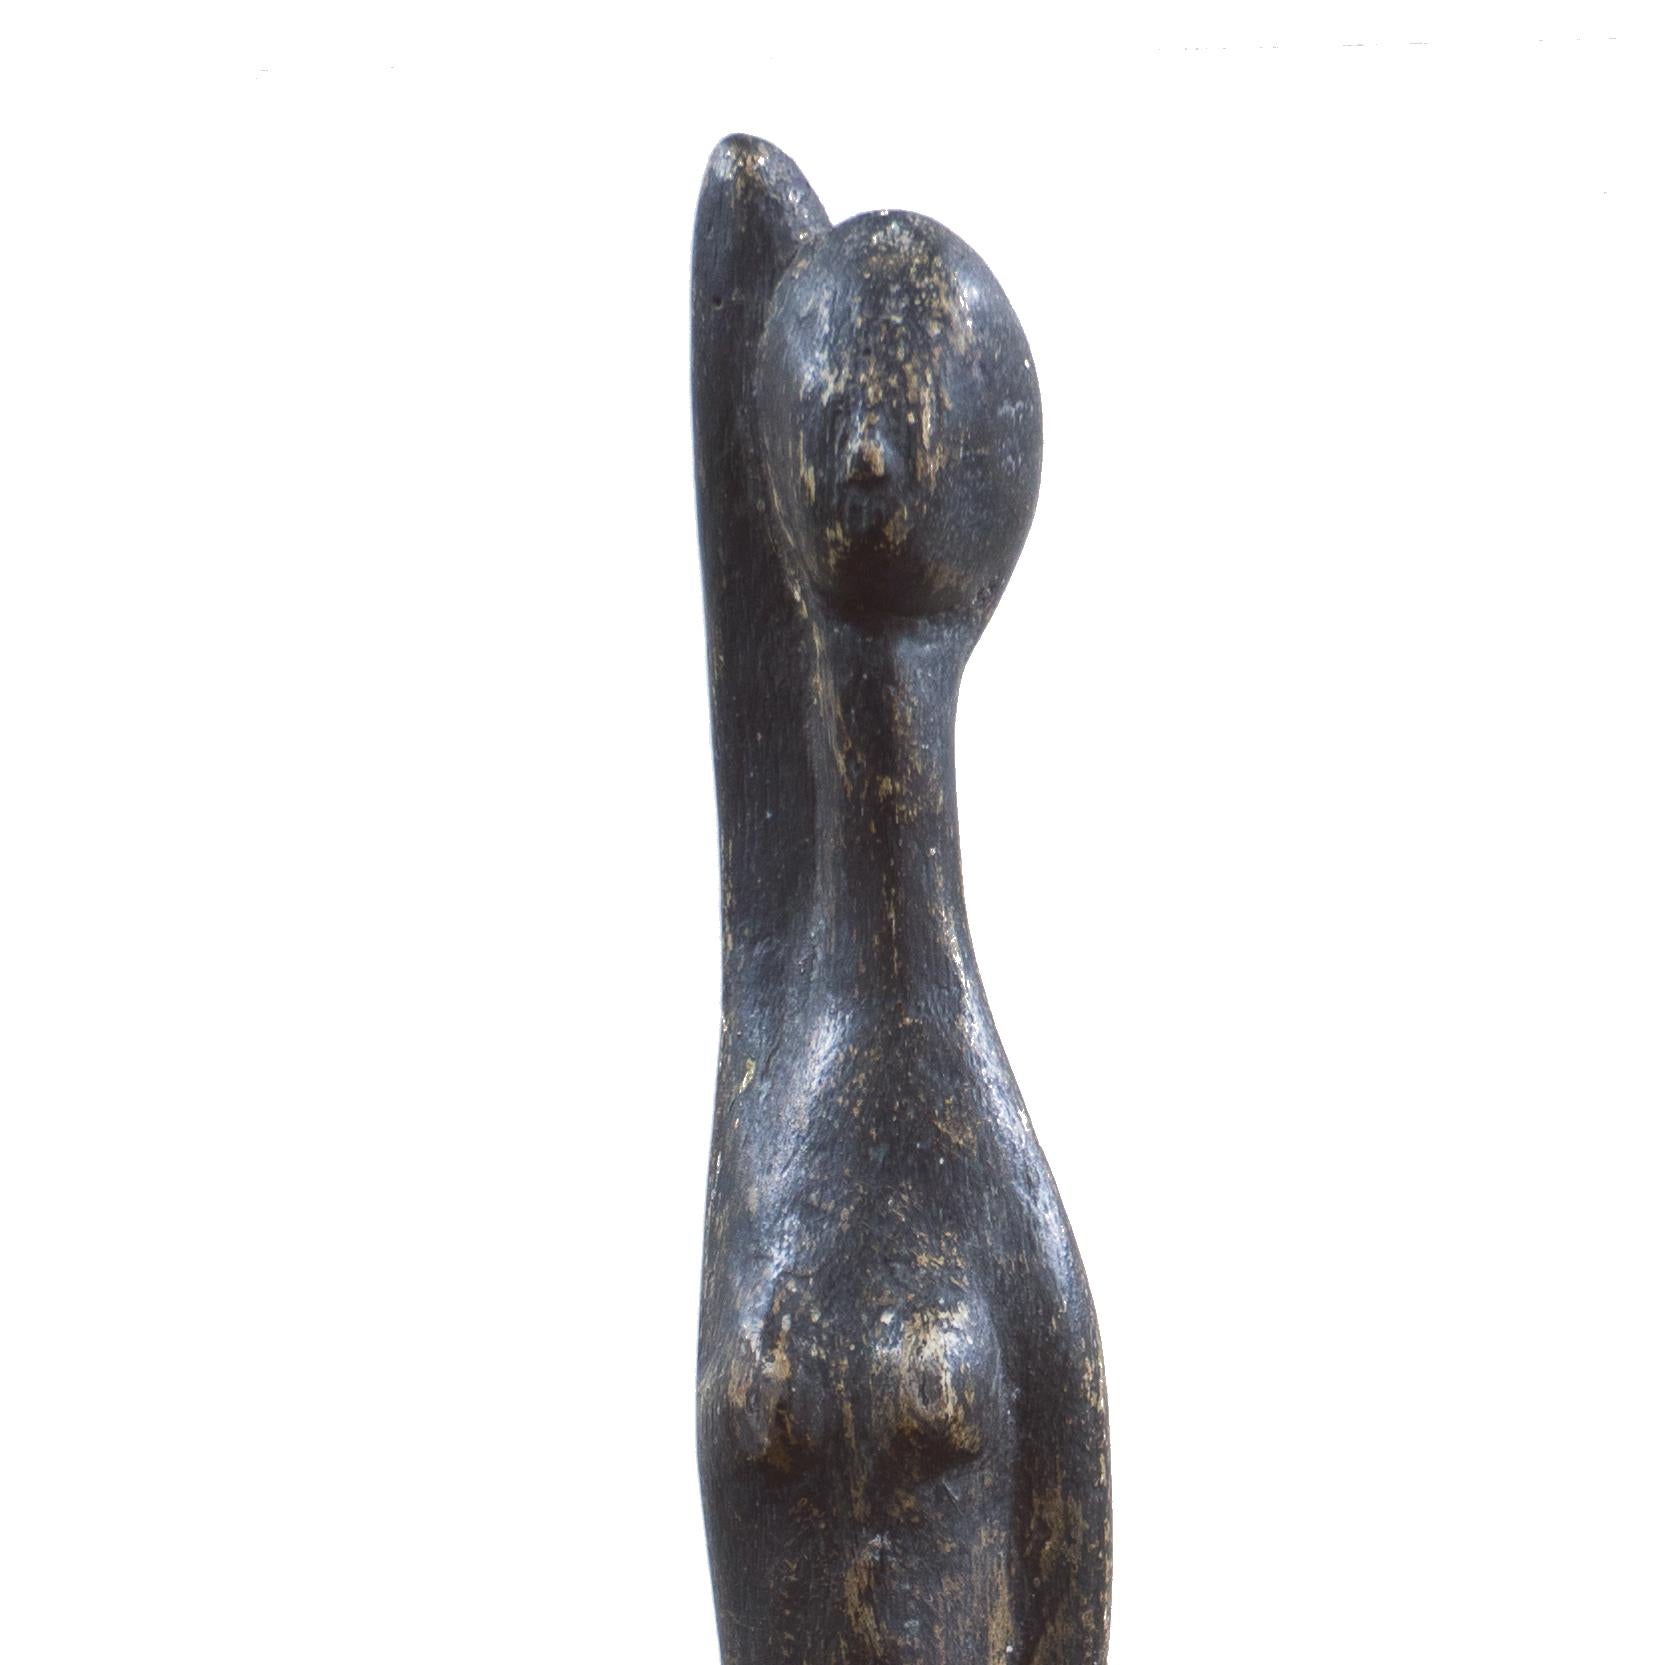  „Woman Standing“, modernistische Skulptur, San Francisco Bay Area, de Young Museum – Sculpture von Wedo Georgetti